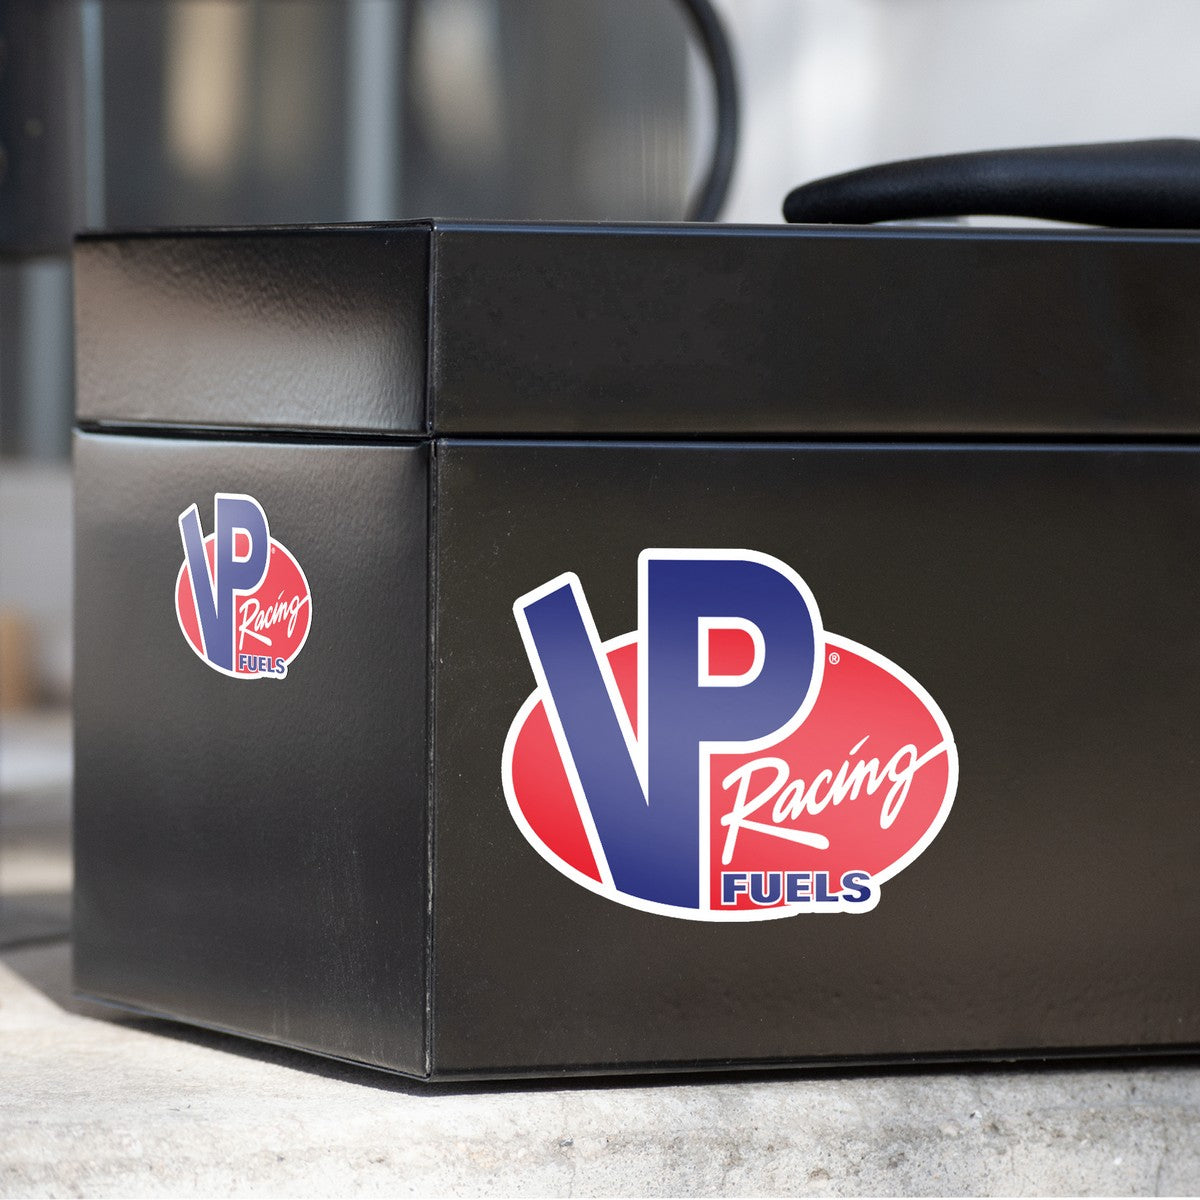 VP Racing Fuels Logos